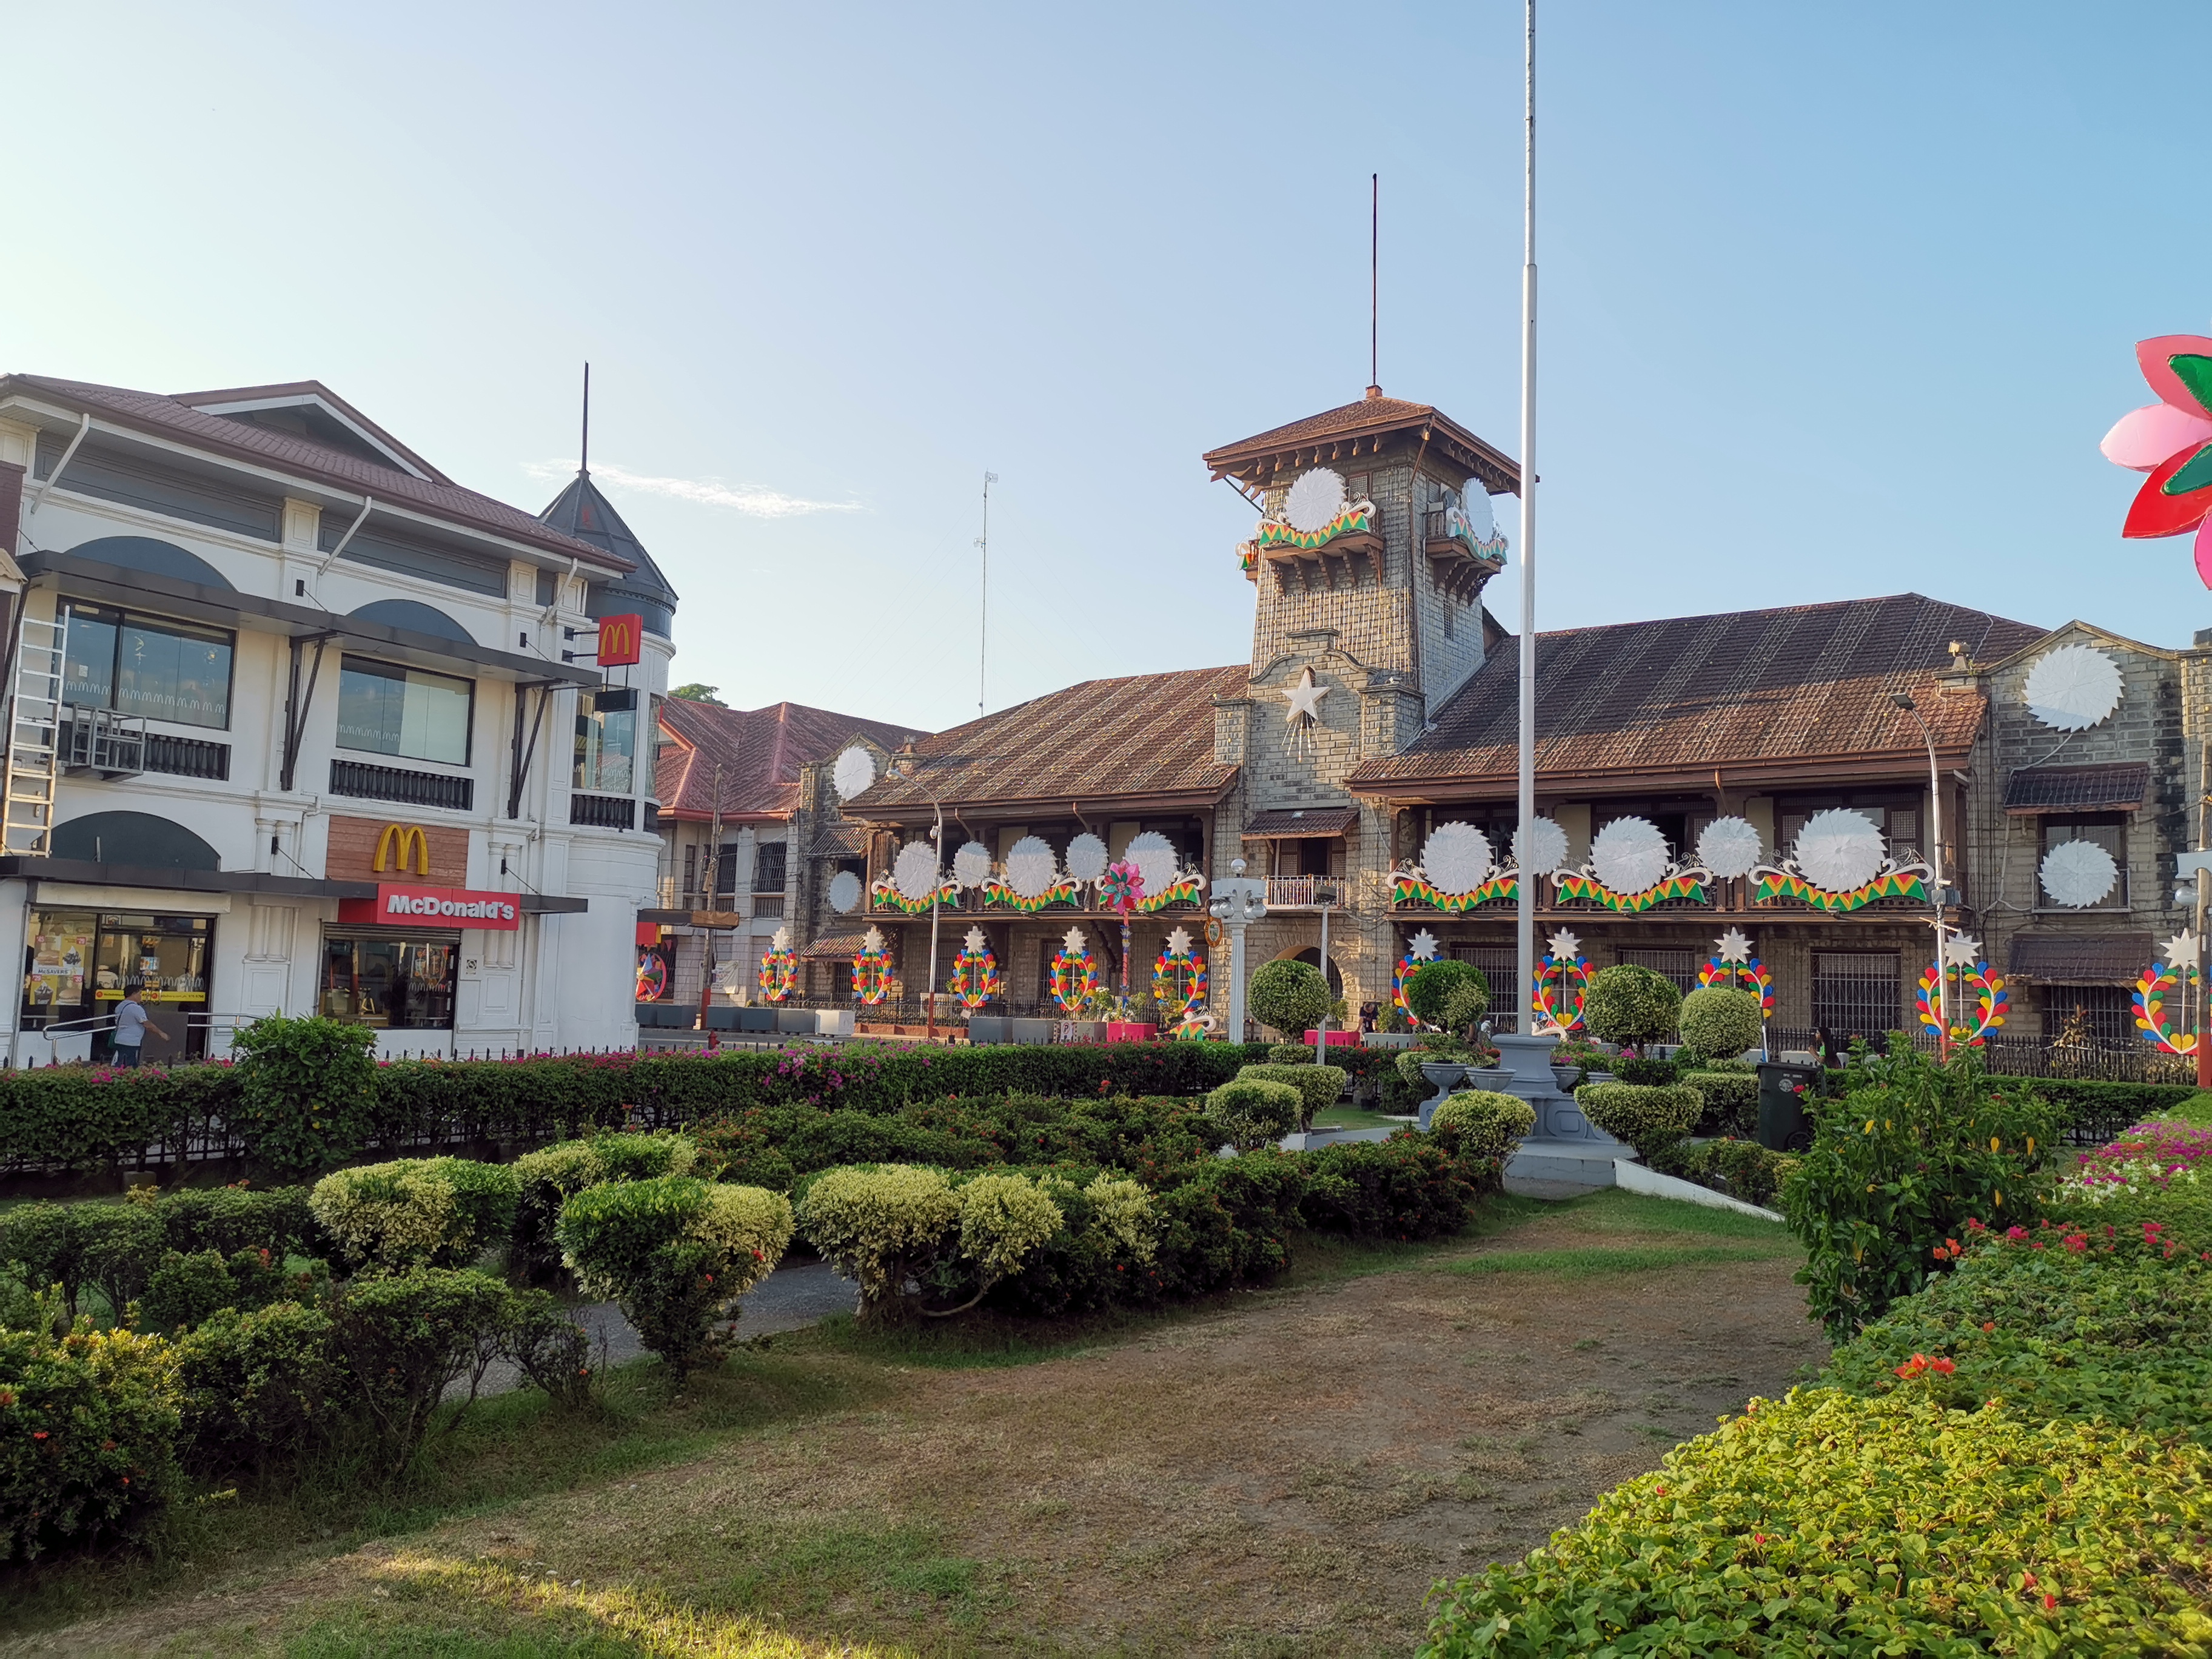 Zamboanga City Hall